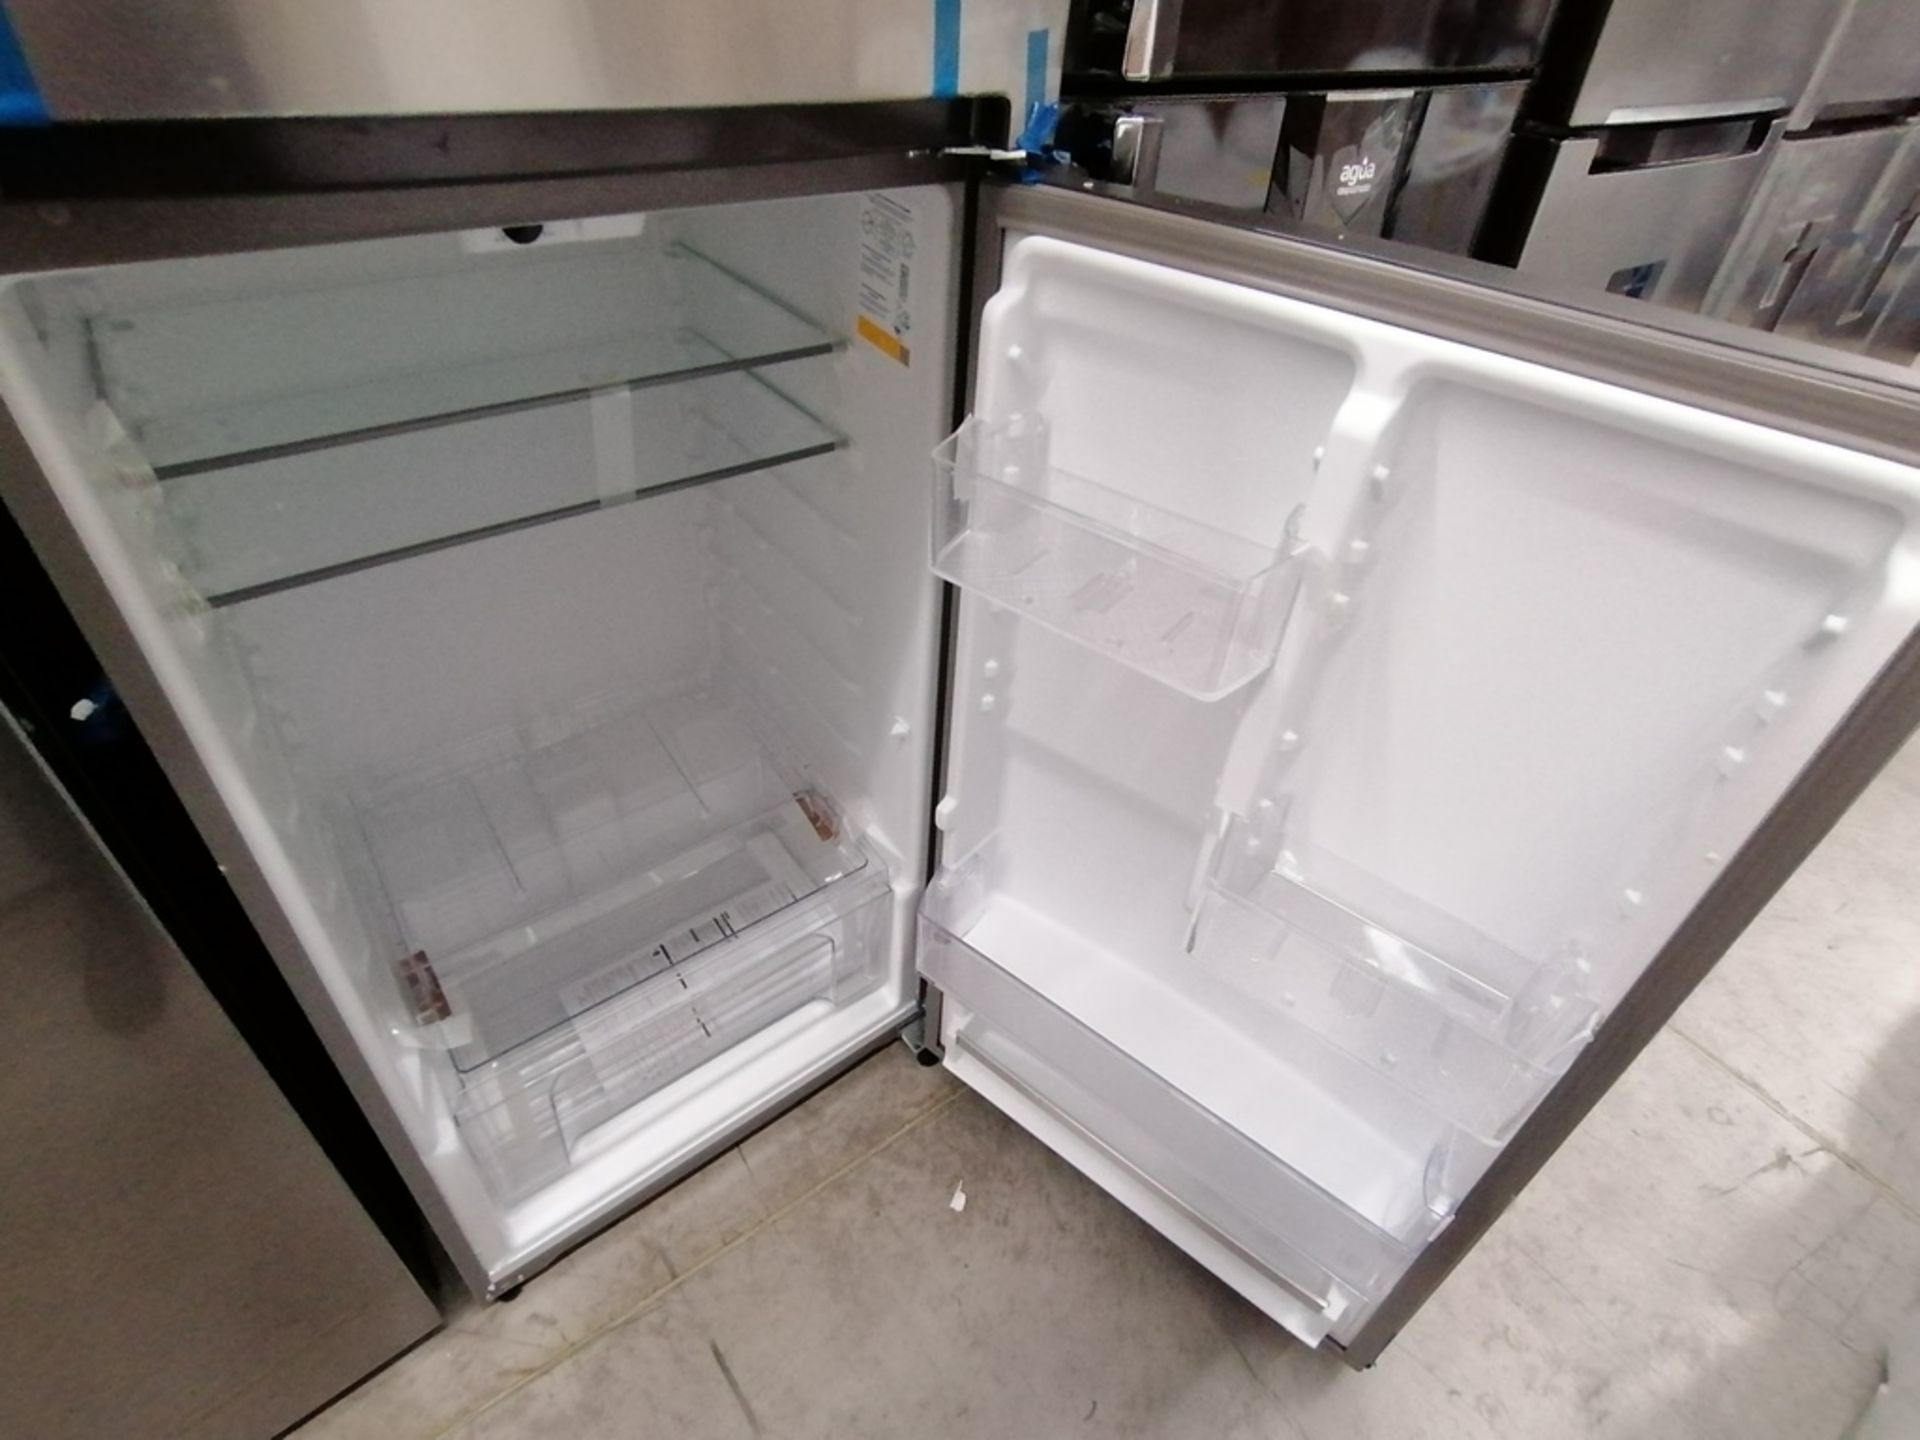 Lote de 2 refrigeradores incluye: 1 Refrigerador, Marca Samsung, Modelo RT29K500JS8, Serie 0AZS4BAR - Image 7 of 15